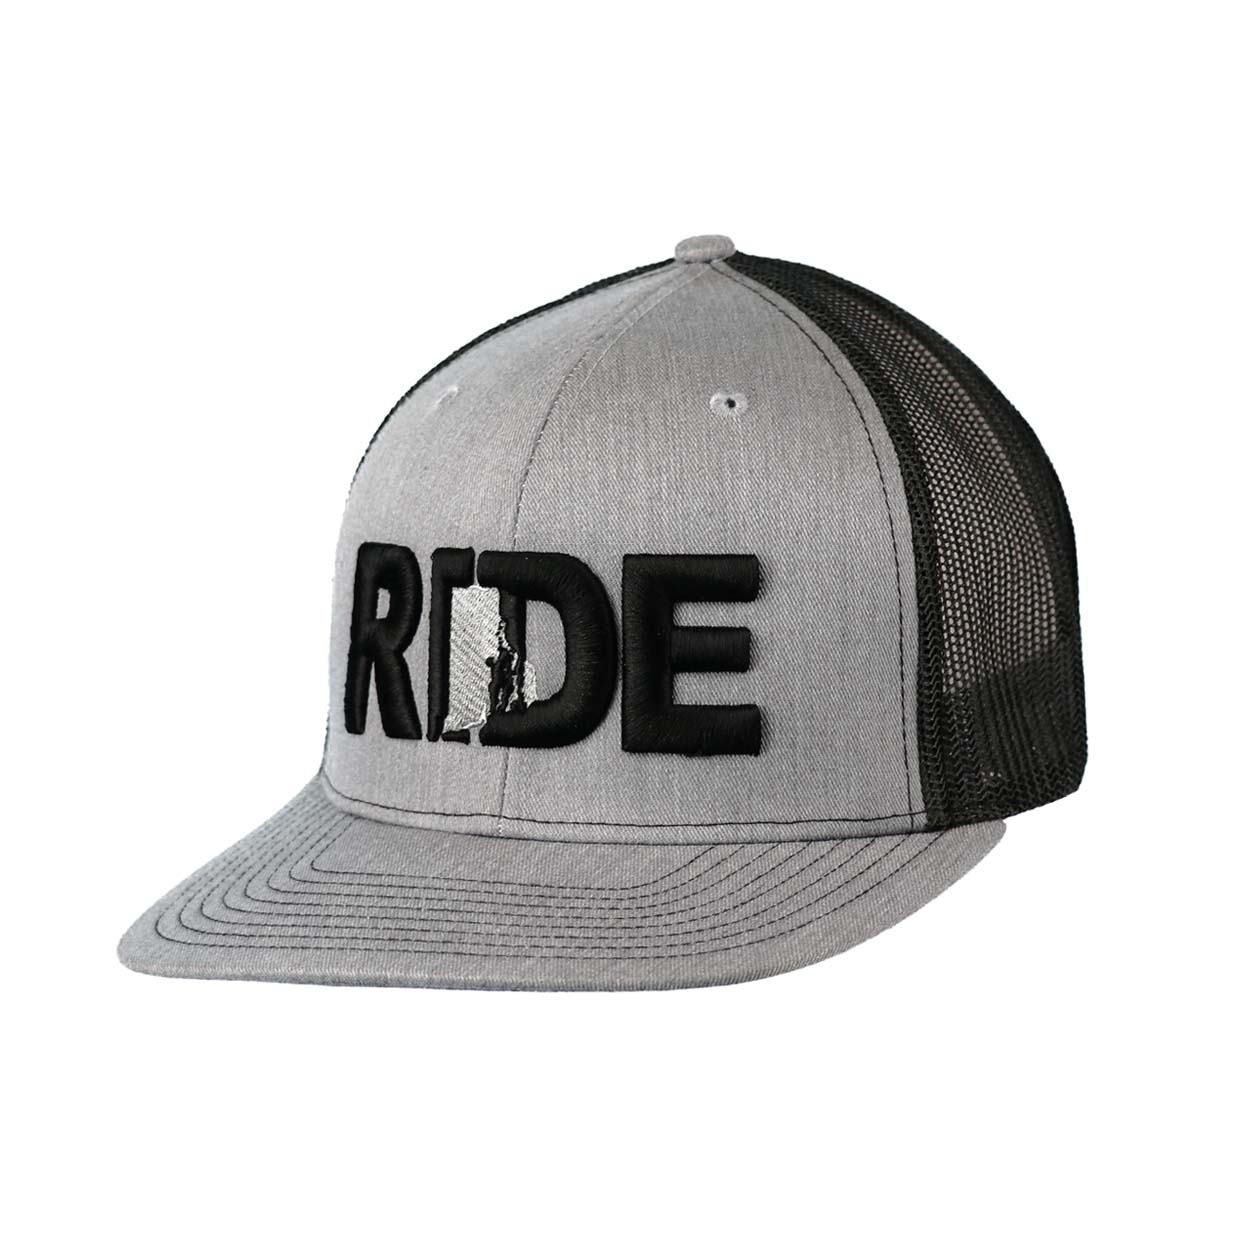 Ride Rhode Island Classic Embroidered Snapback Trucker Hat Heather Gray/Black